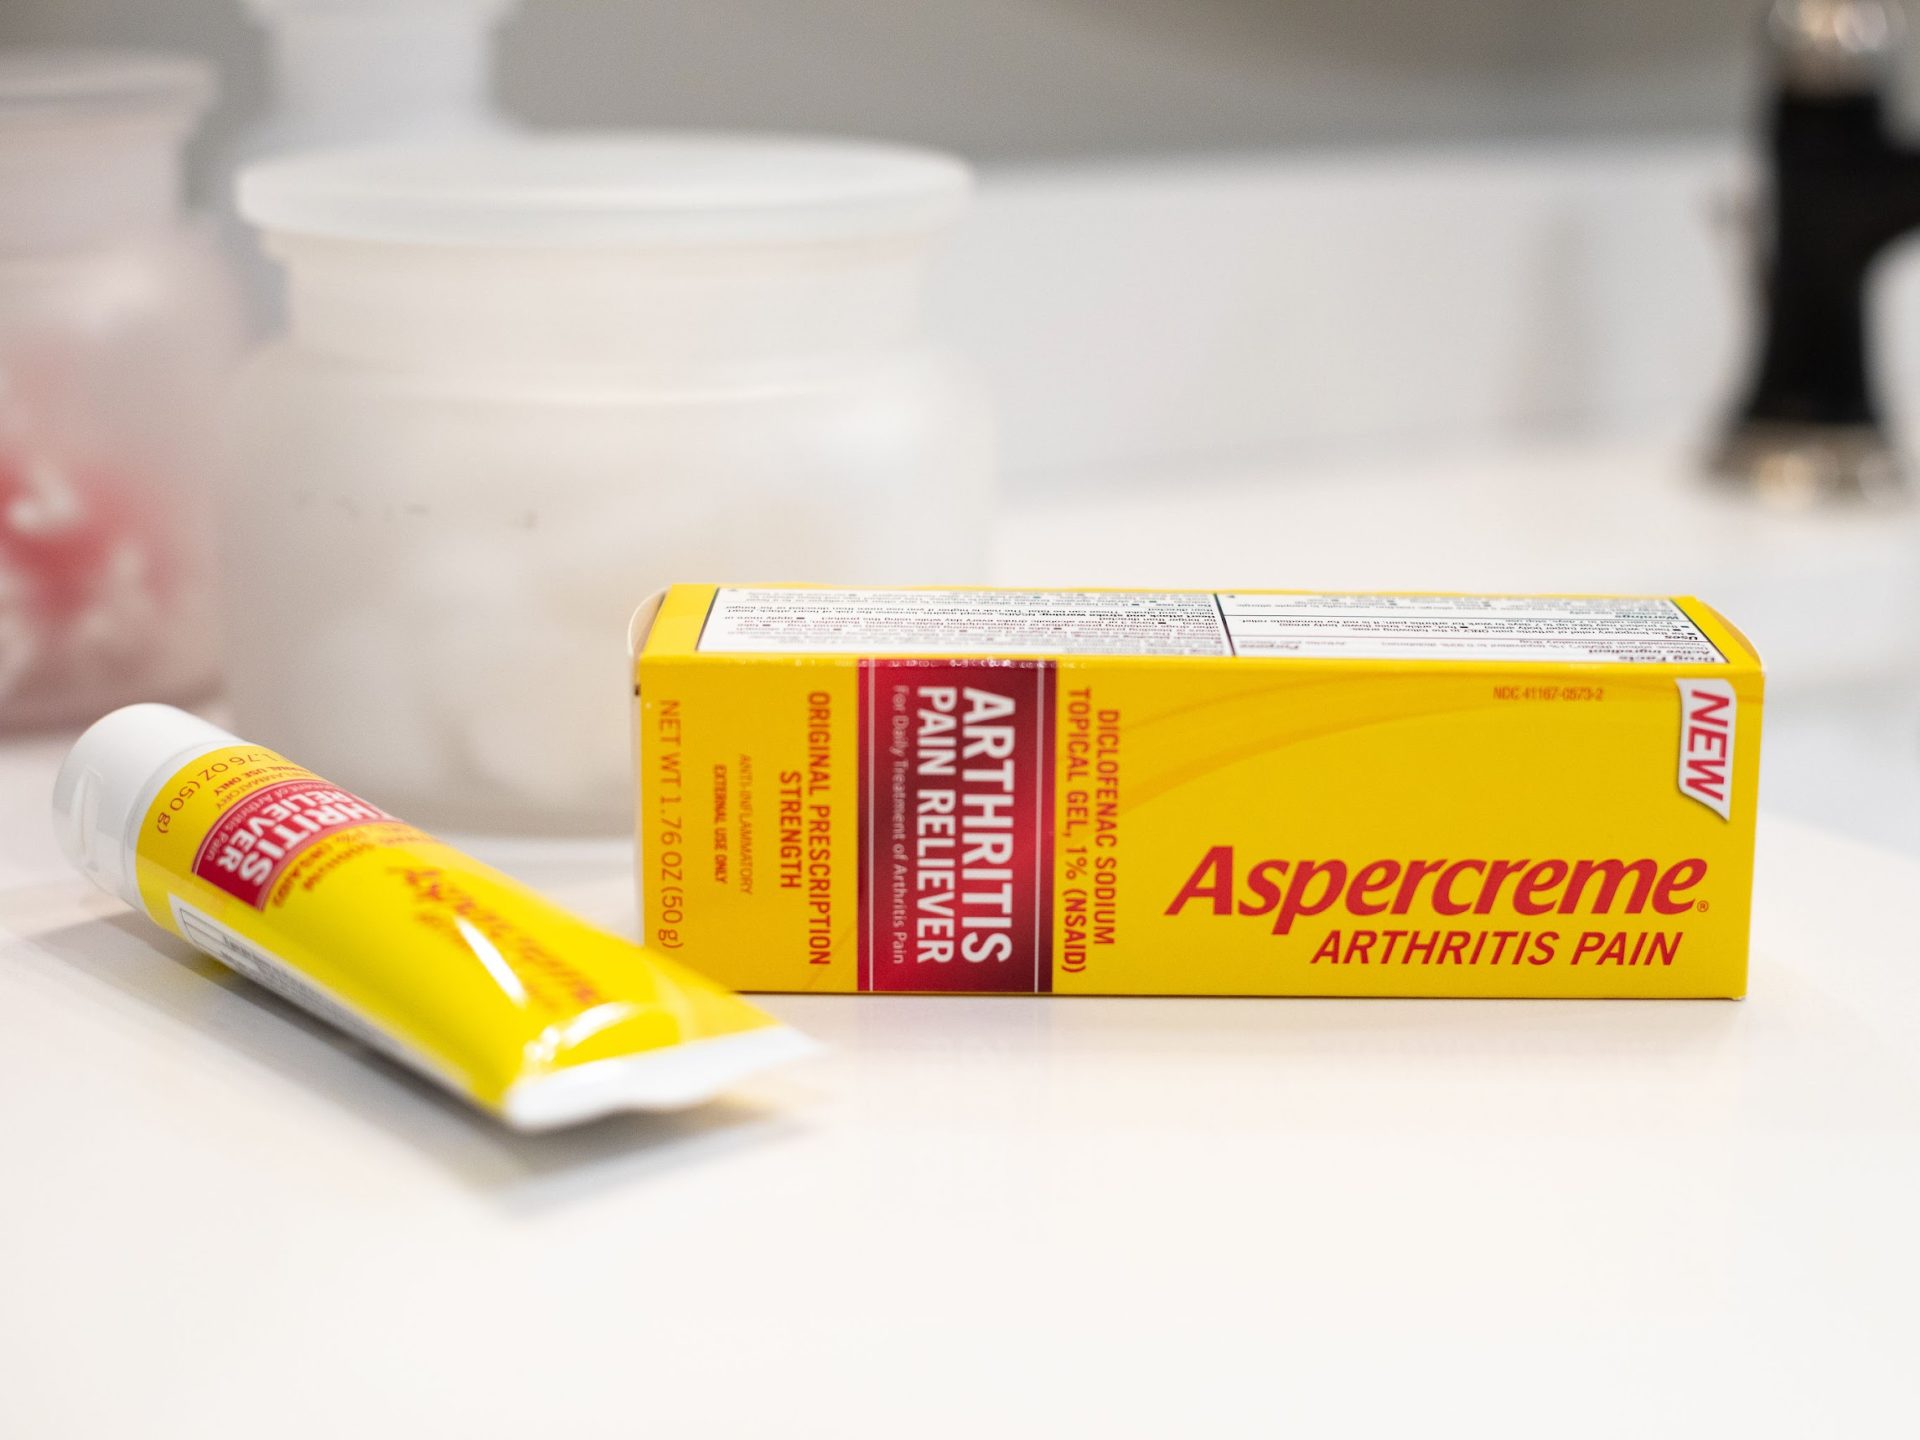 Aspercreme Products As Low As $5.49 At Kroger (Regular Price $10.99)